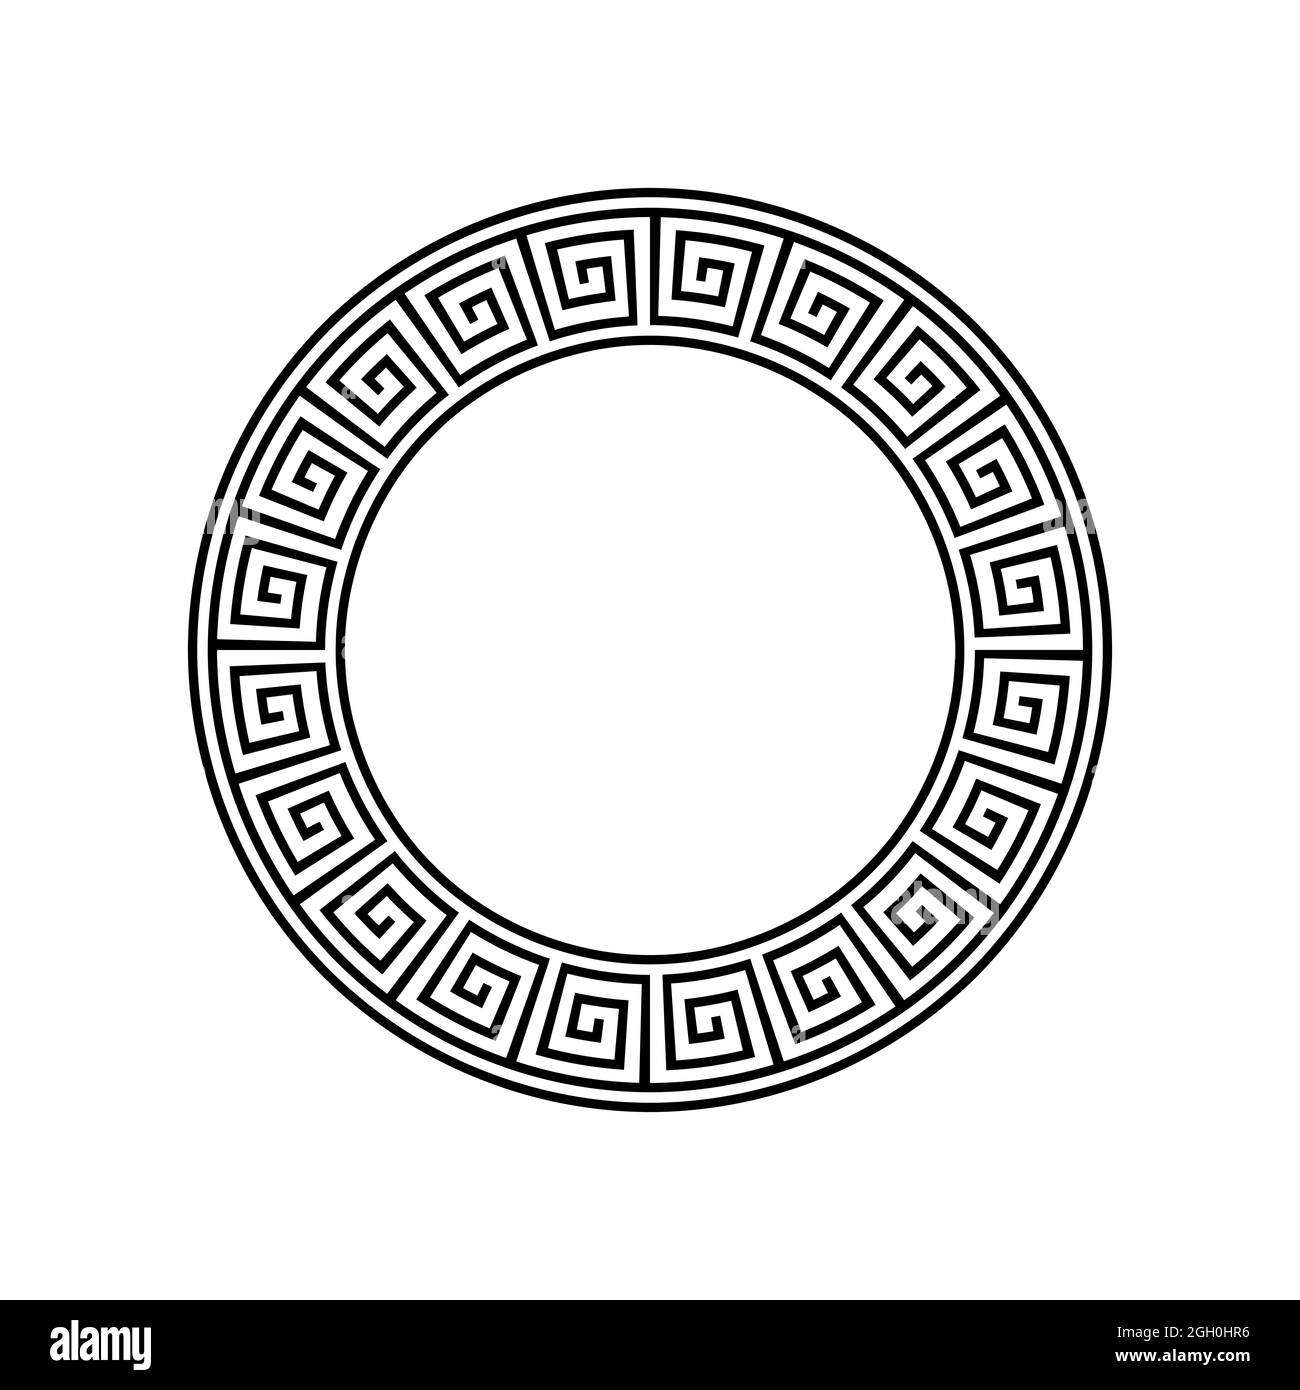 Ancient abstract ornament. Round aztec pattern. Decorative circular frame. Geometric rosette element. Greek style art design element. Circular meander Stock Vector